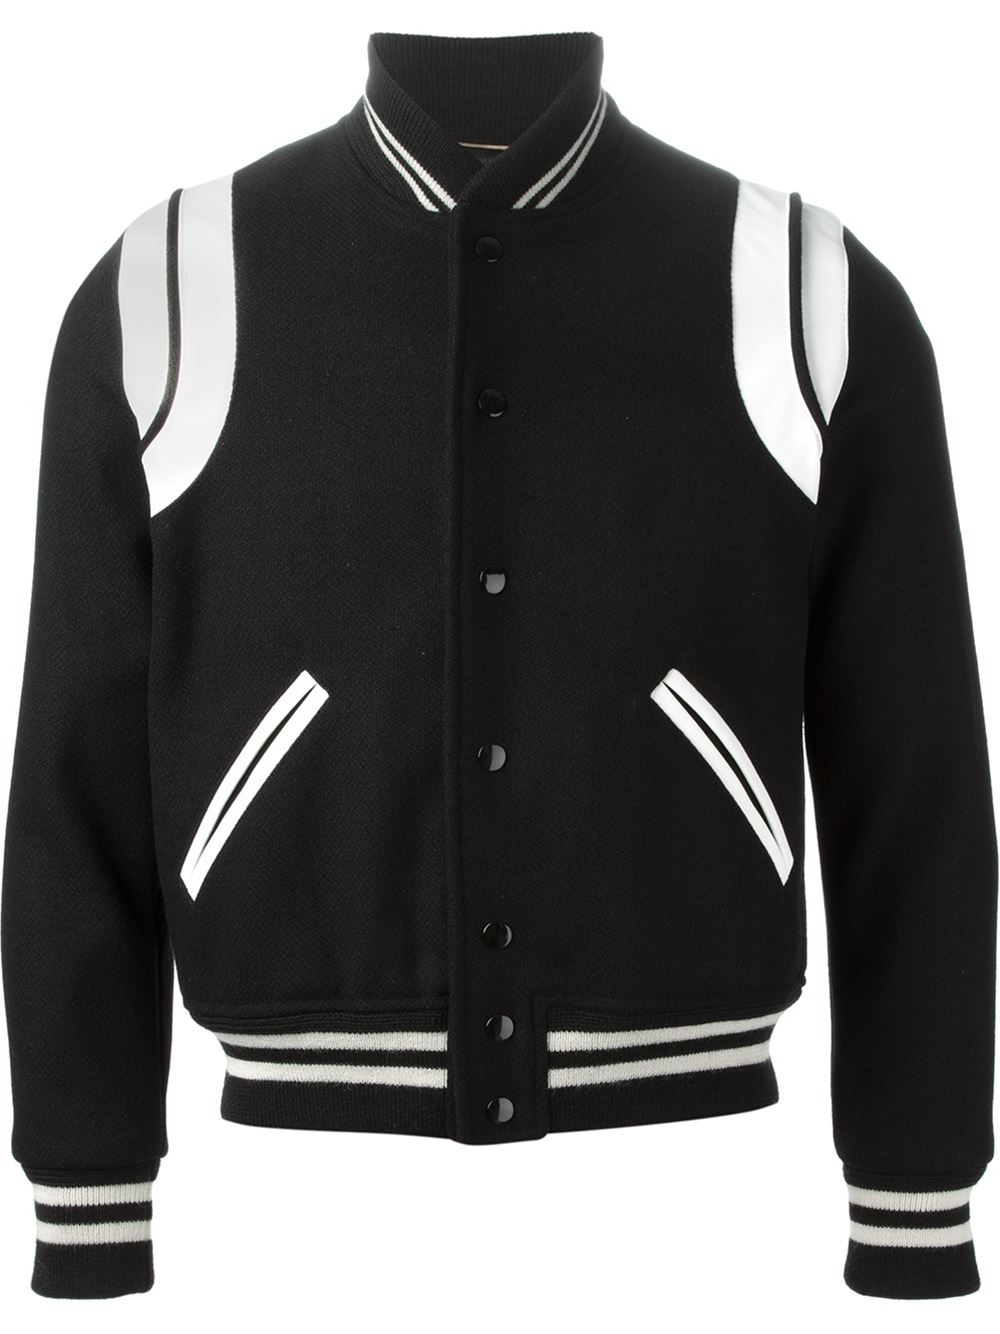 Lyst - Saint Laurent Teddy Jacket in Black